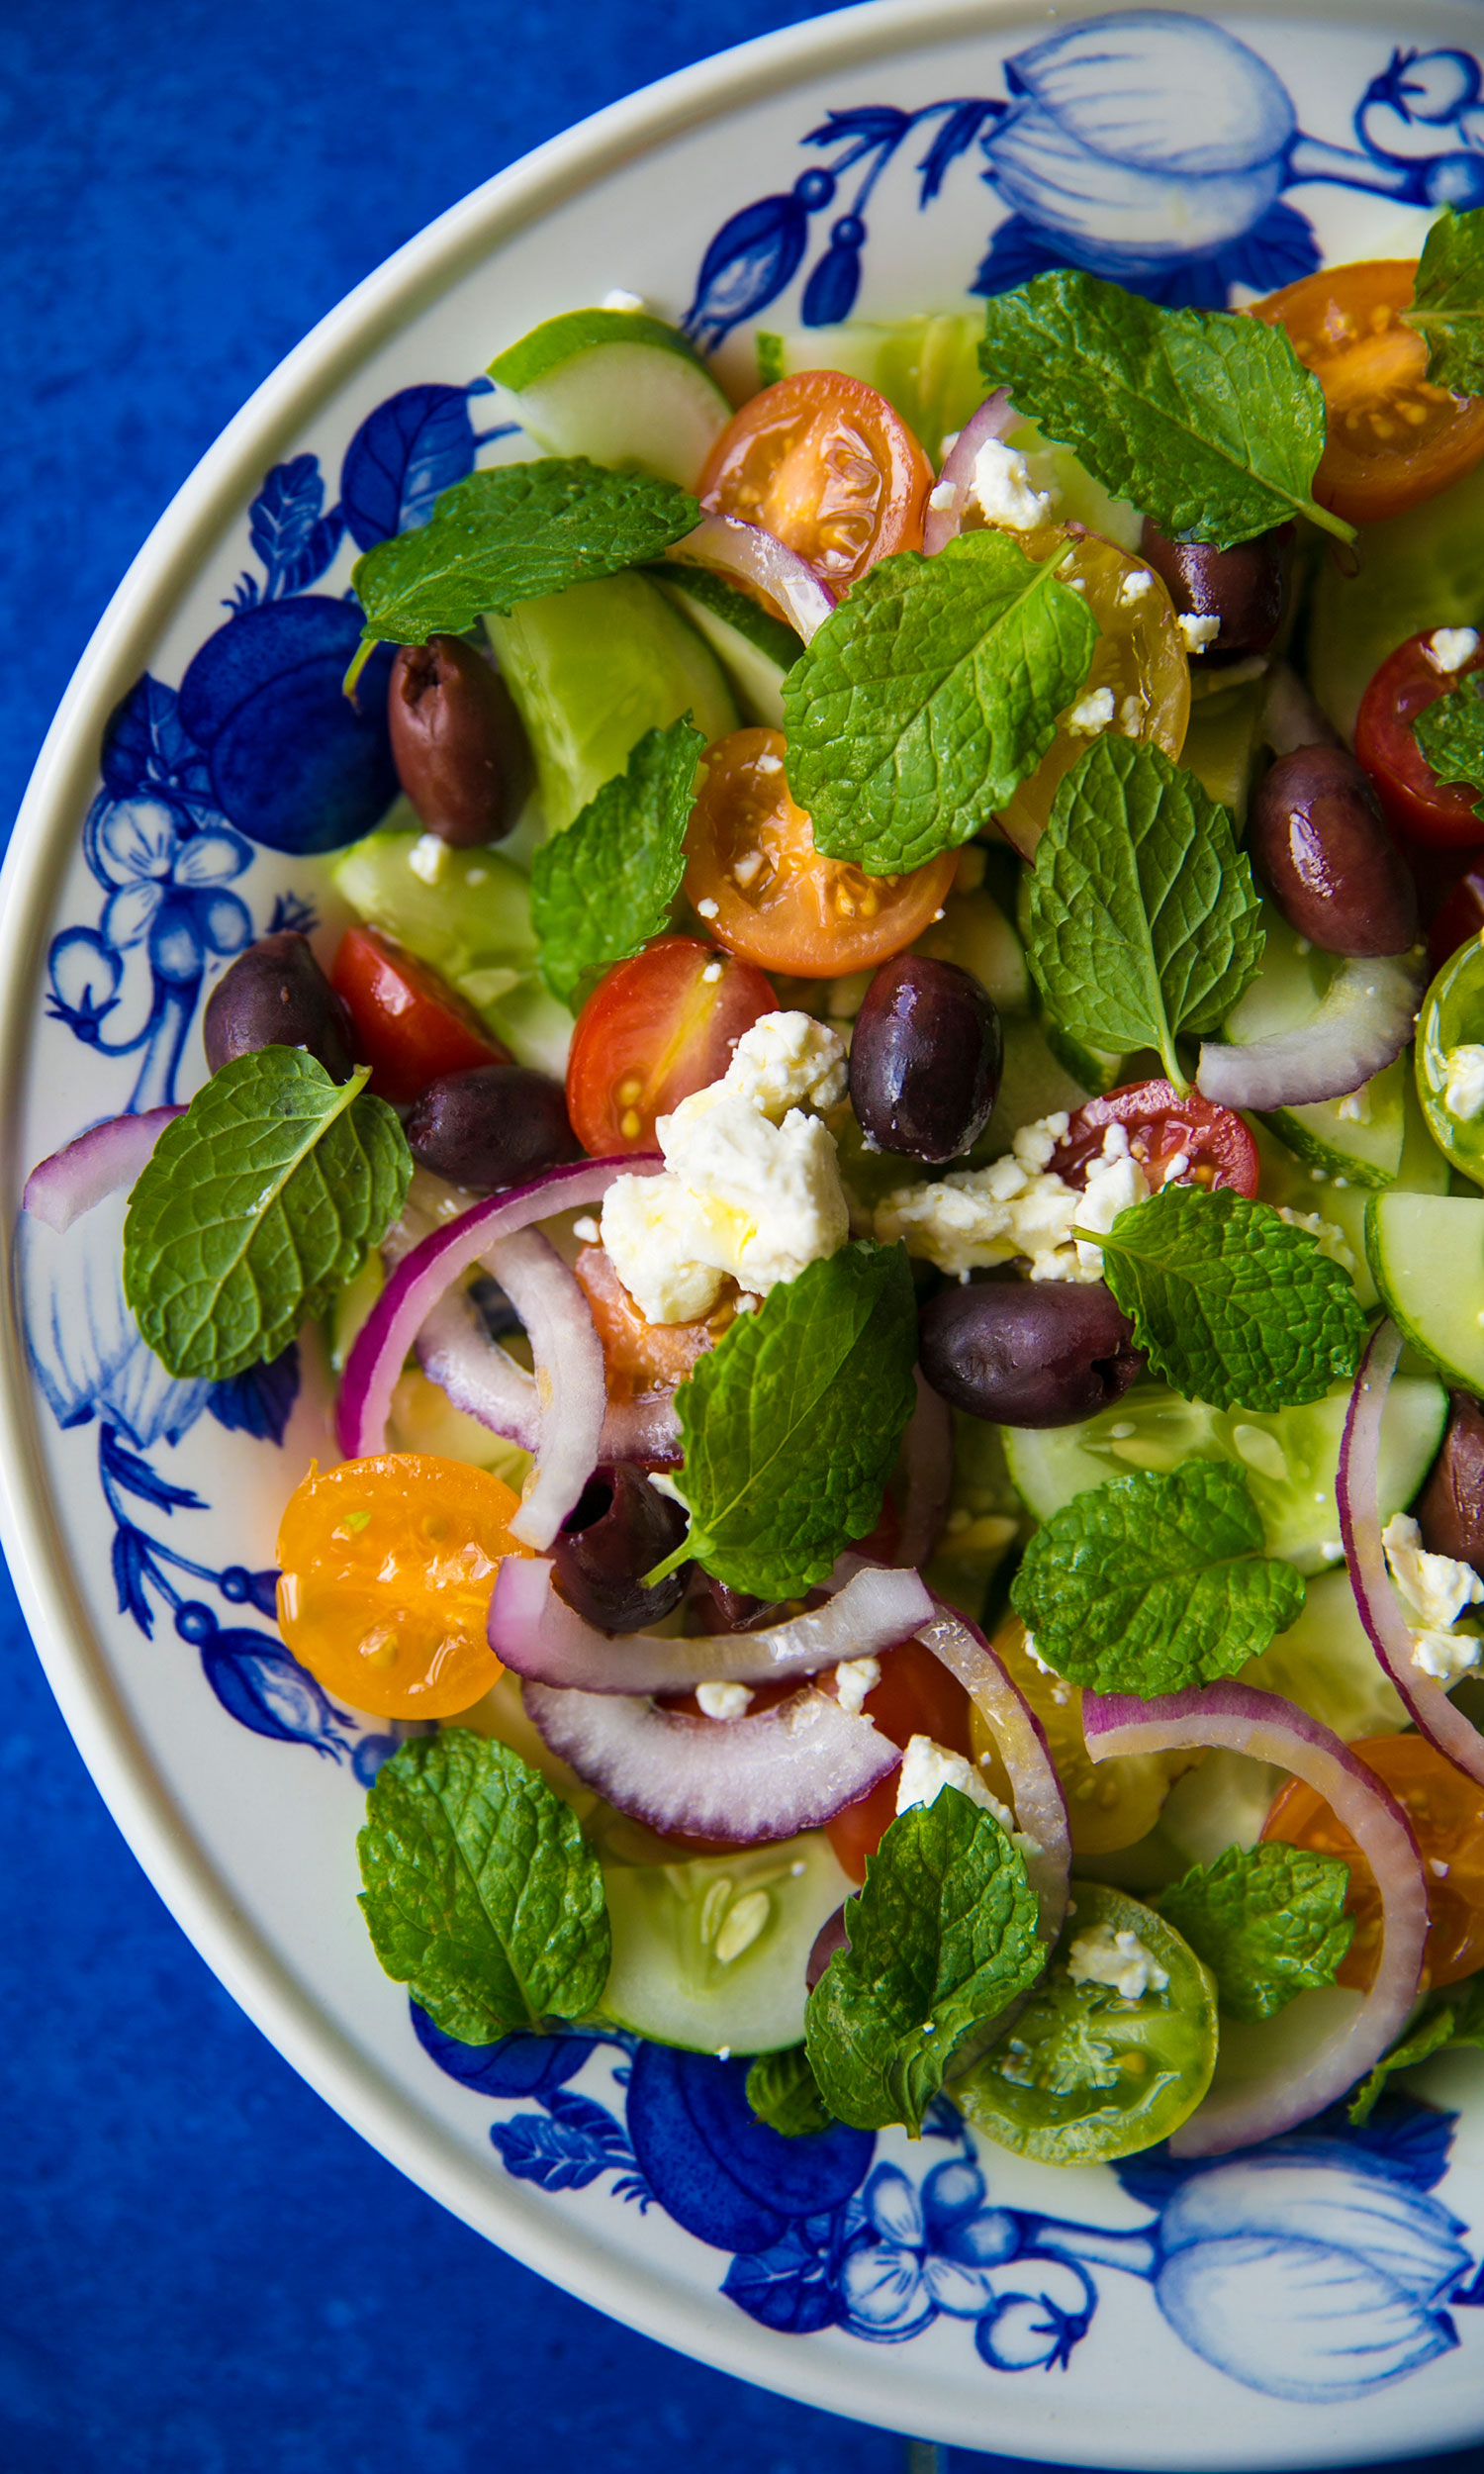 Crumbled Feta And Fresh Tomatoes And Cucumbers Make The Best Salad